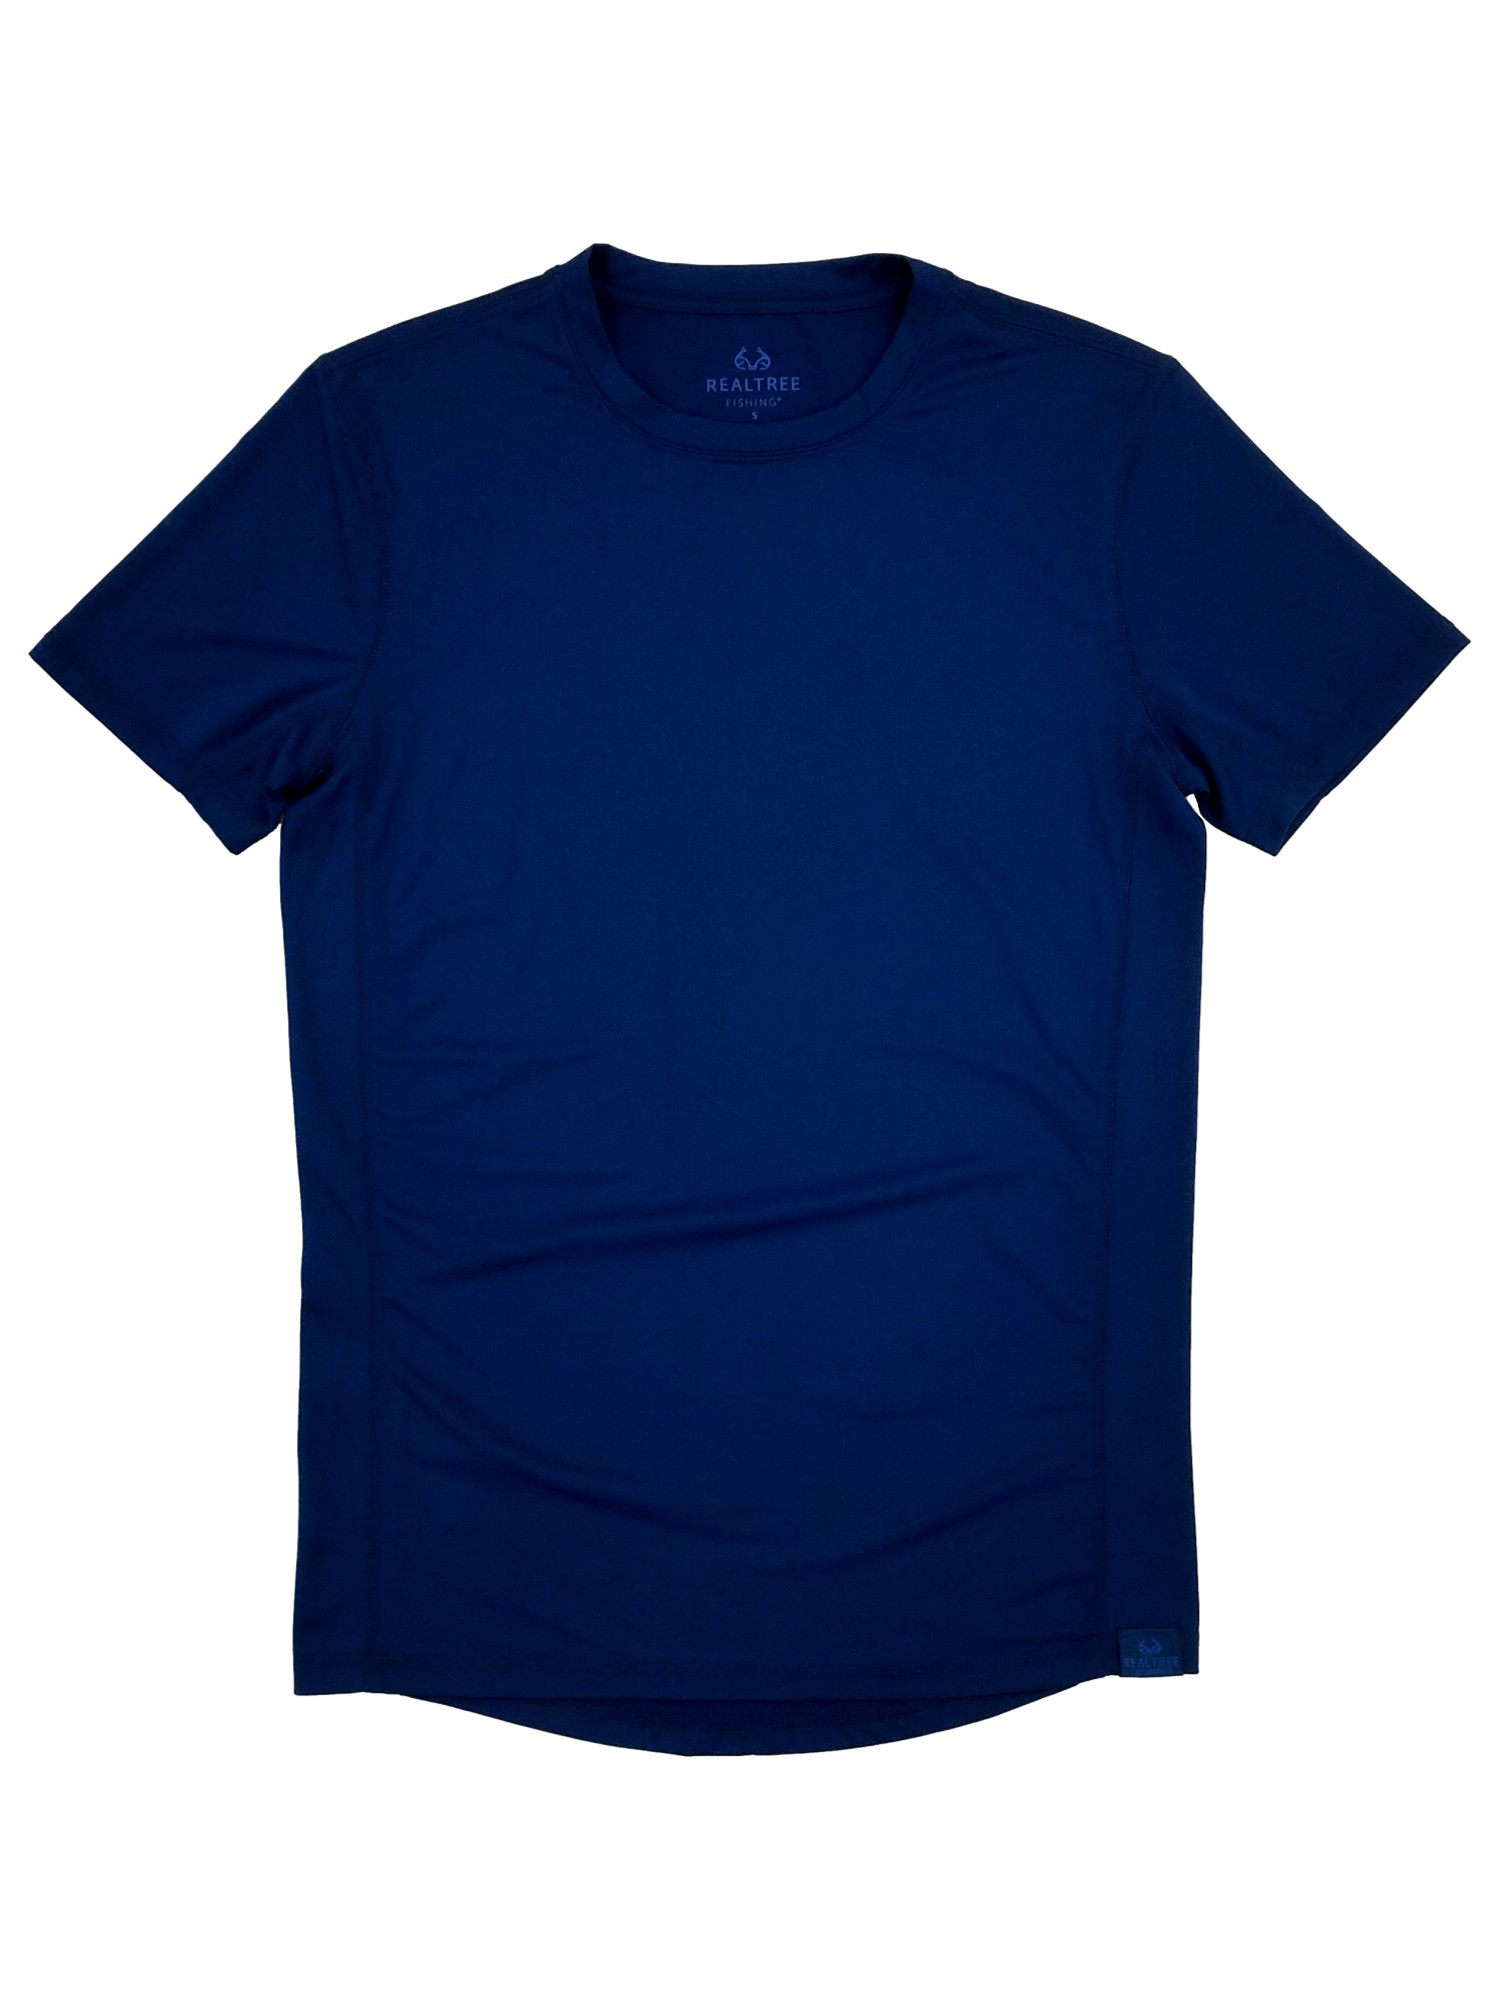 Realtree Mens Navy Blue Short Sleeve Performance Fishing Shirt Small